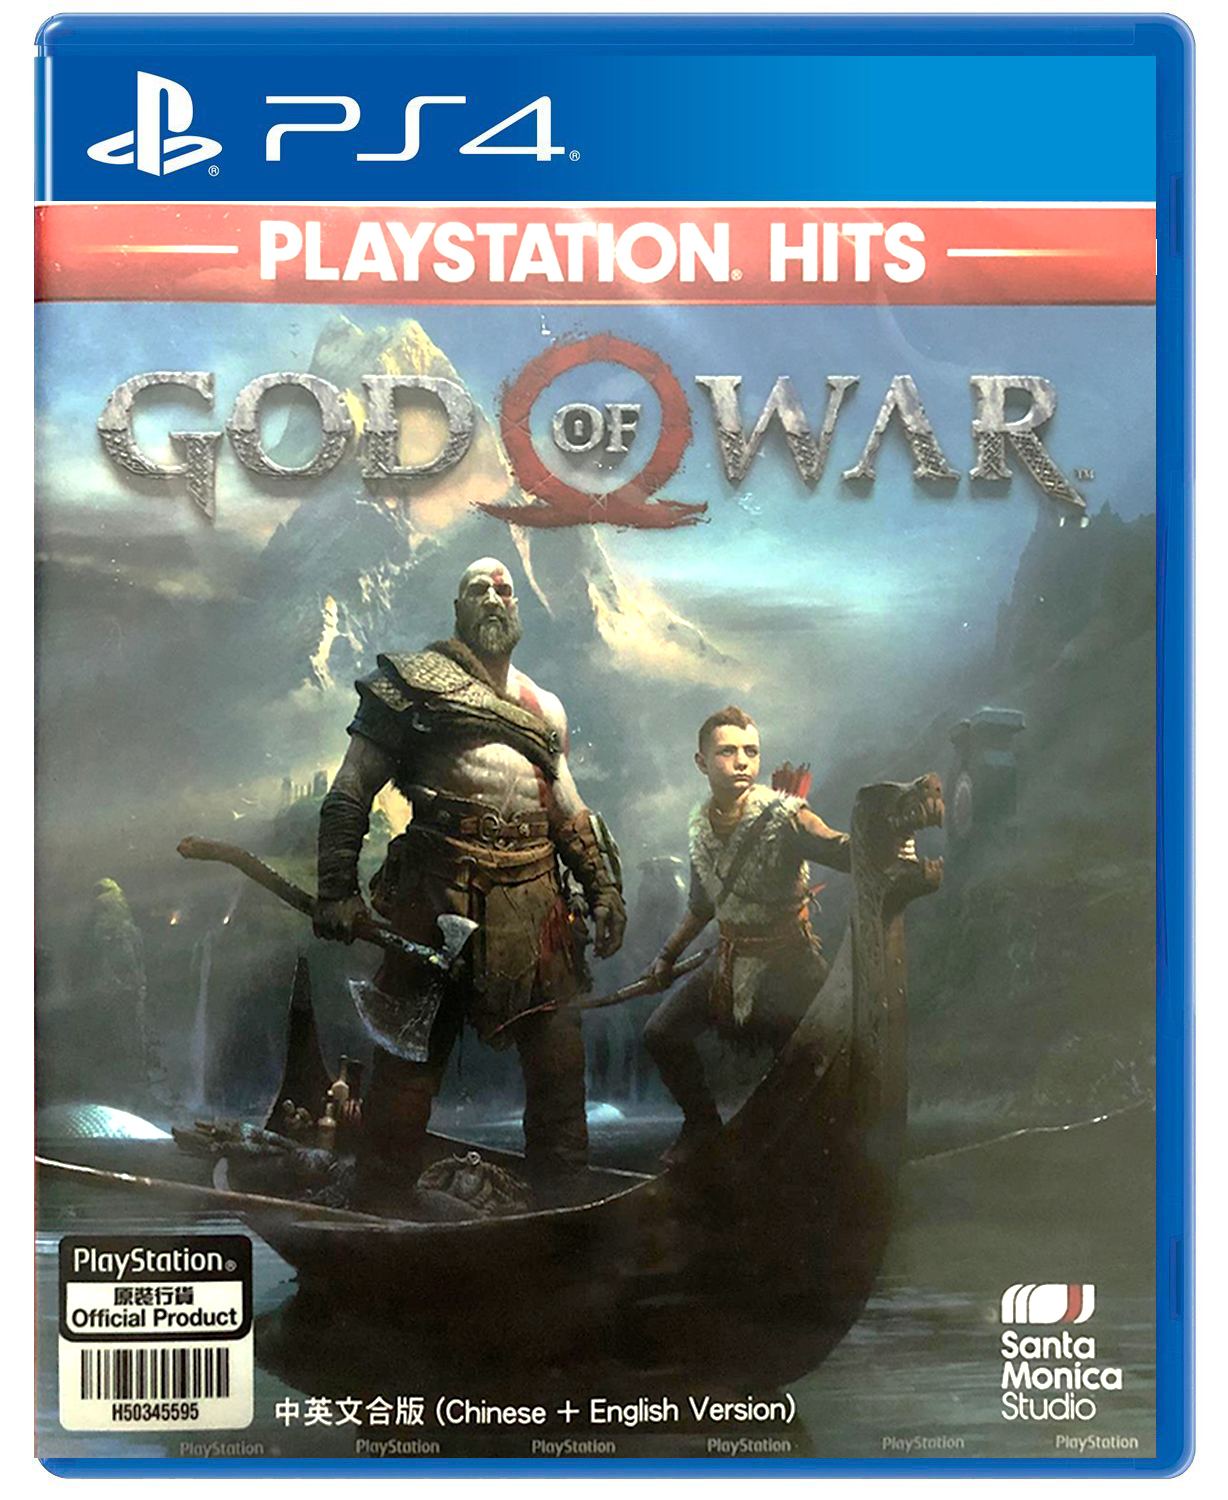 God of War (PlayStation Hits) (Multi-Language) for PlayStation 4